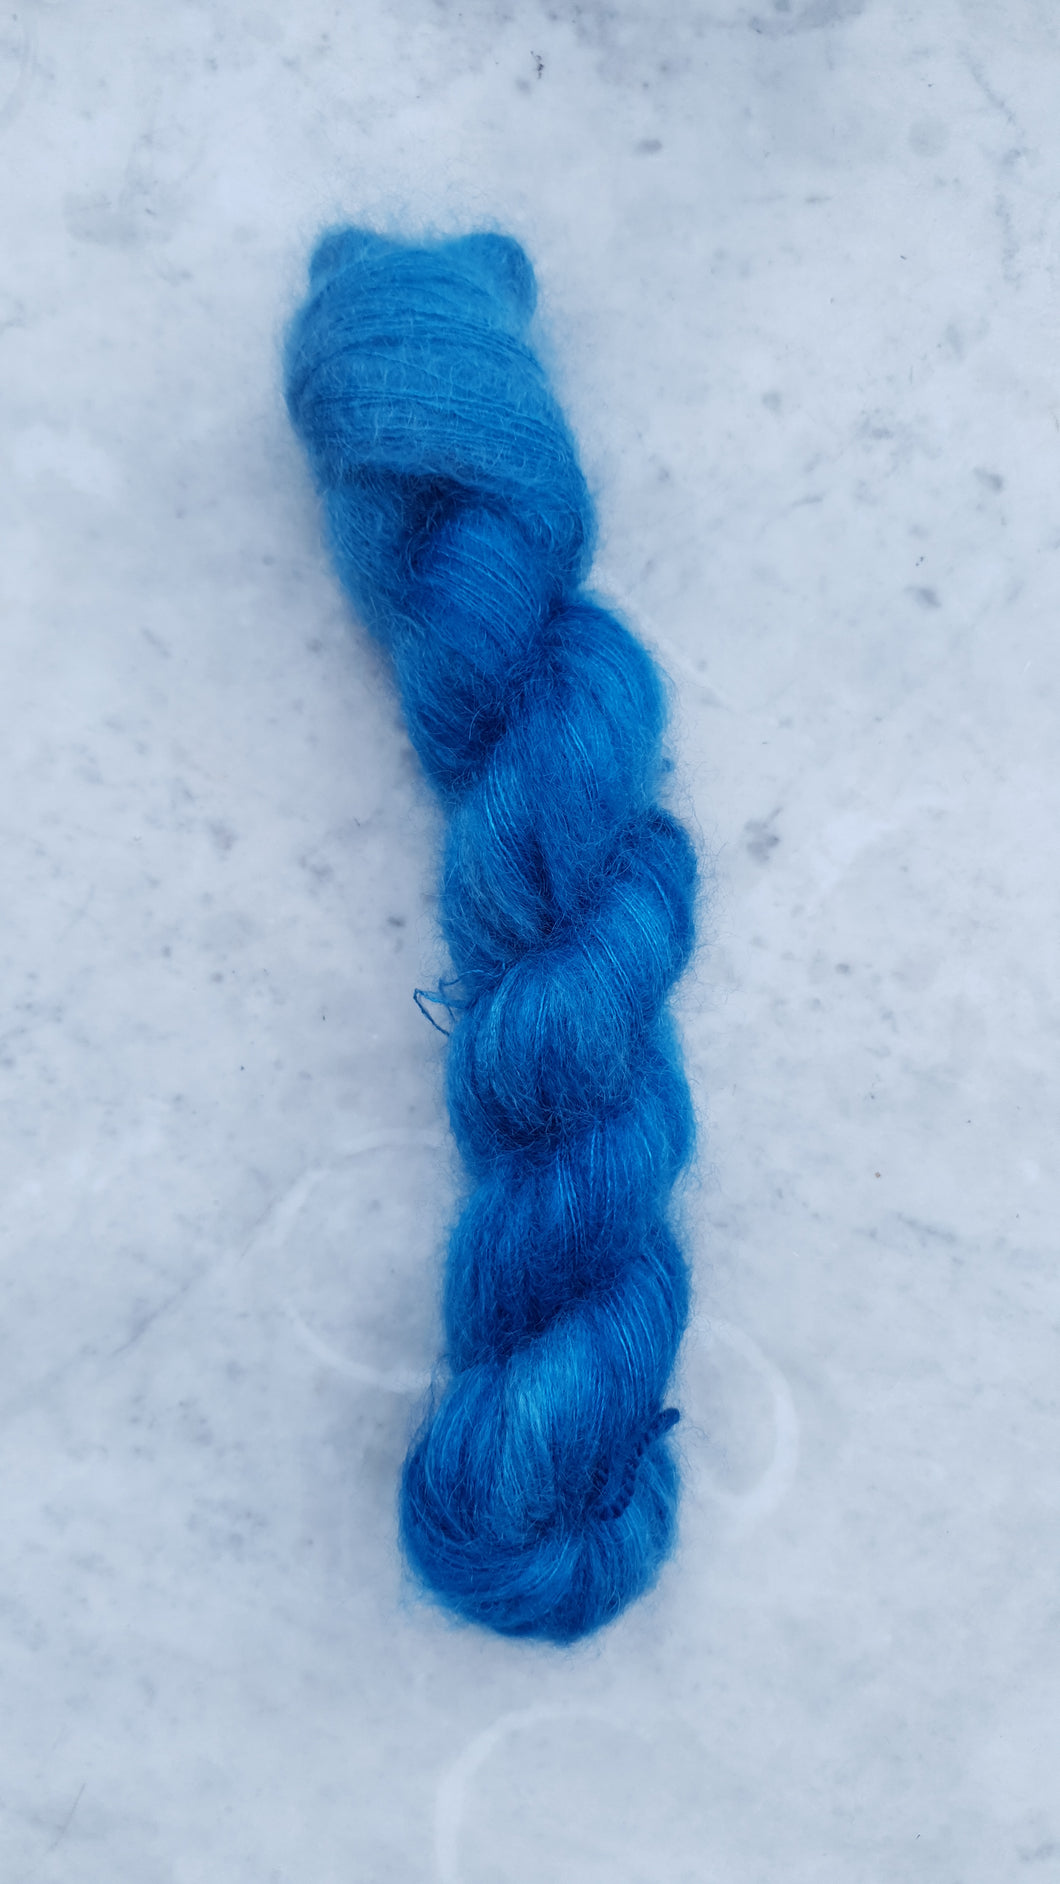 Blue-stocking (Samples)